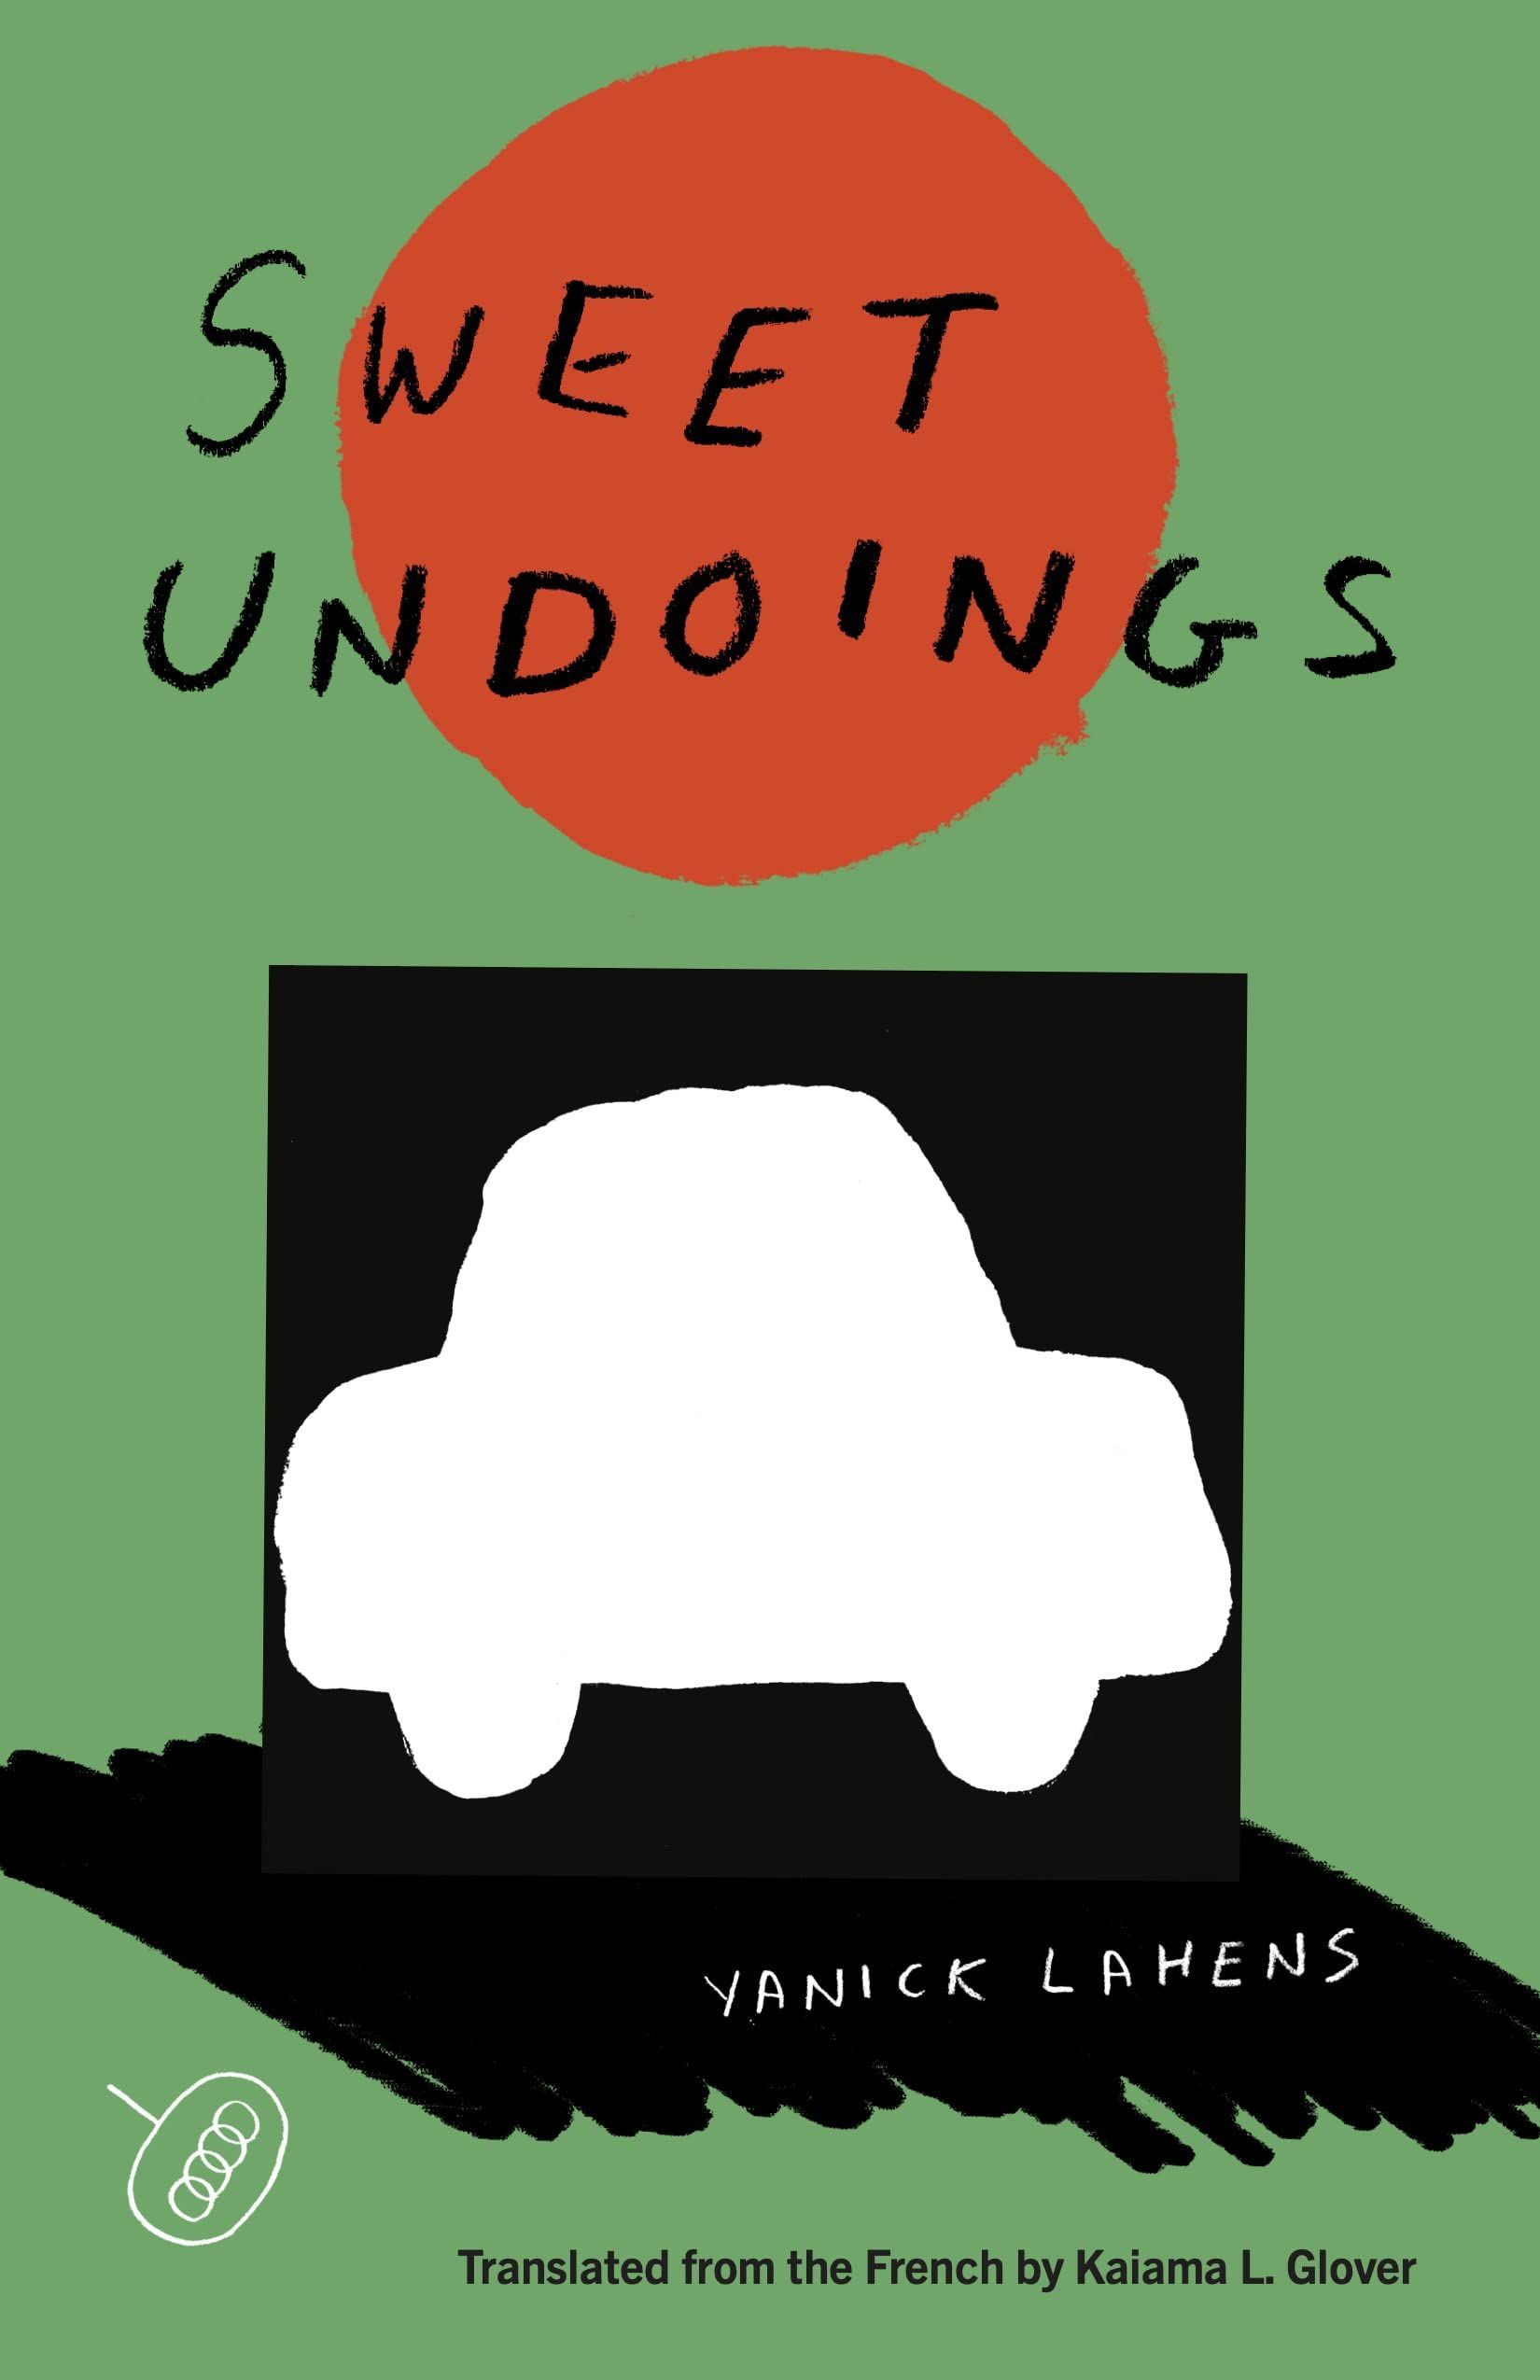 Sweet Undoings by Yanick Lahens book cover